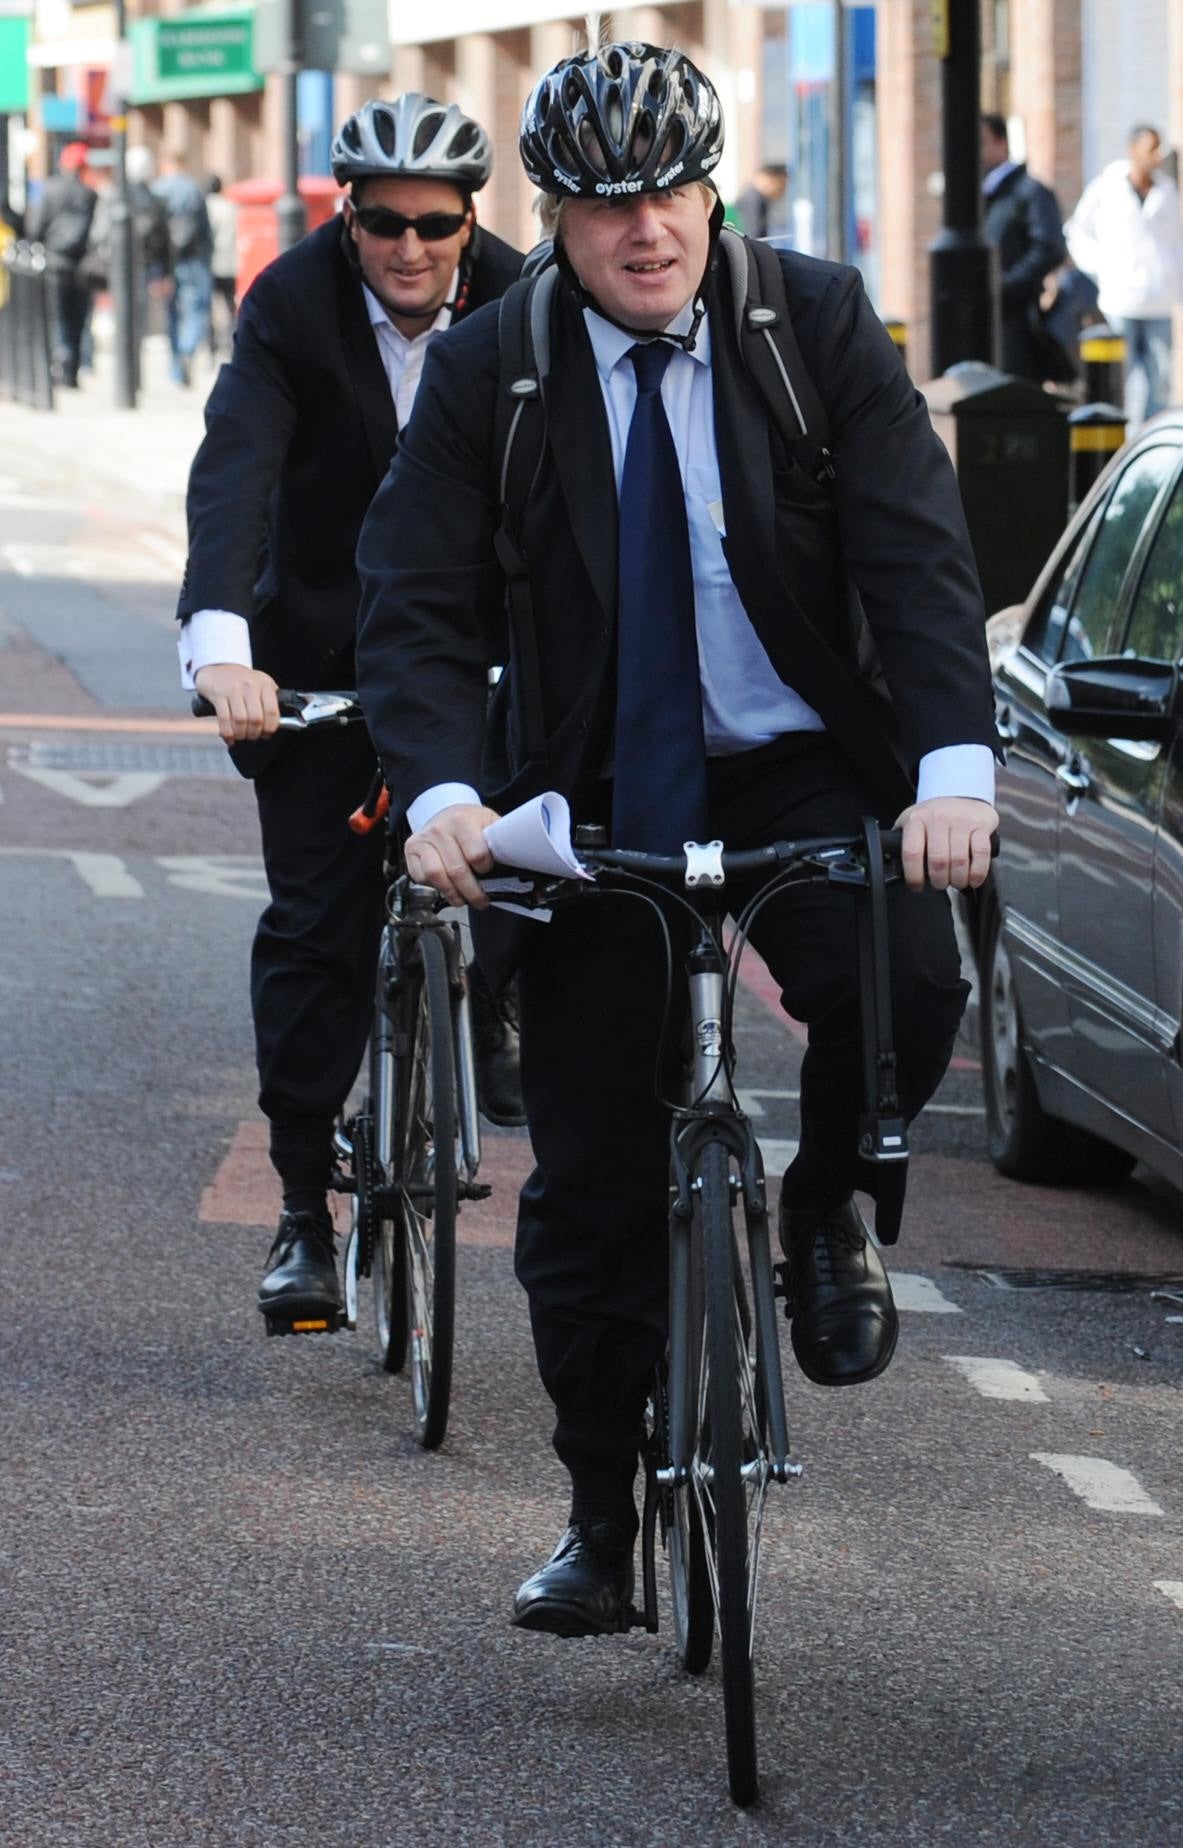 Boris Johnson arriving at the East London Mosque with Guto Harri (Stefan Rousseau/PA)